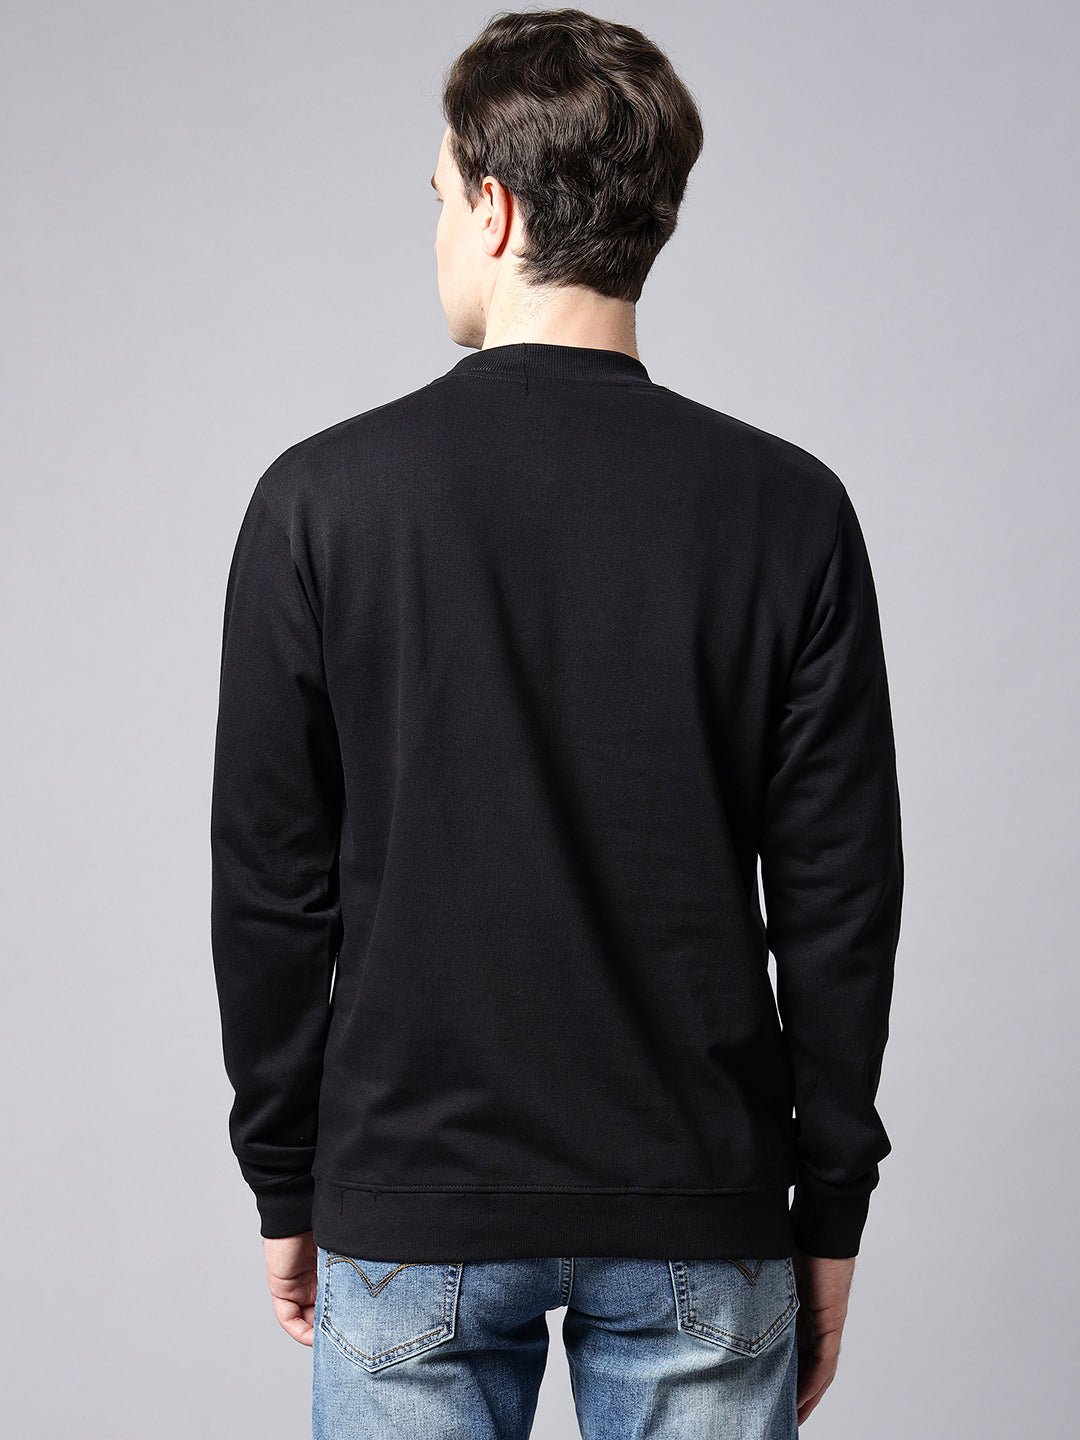 NYC Black Sweatshirt